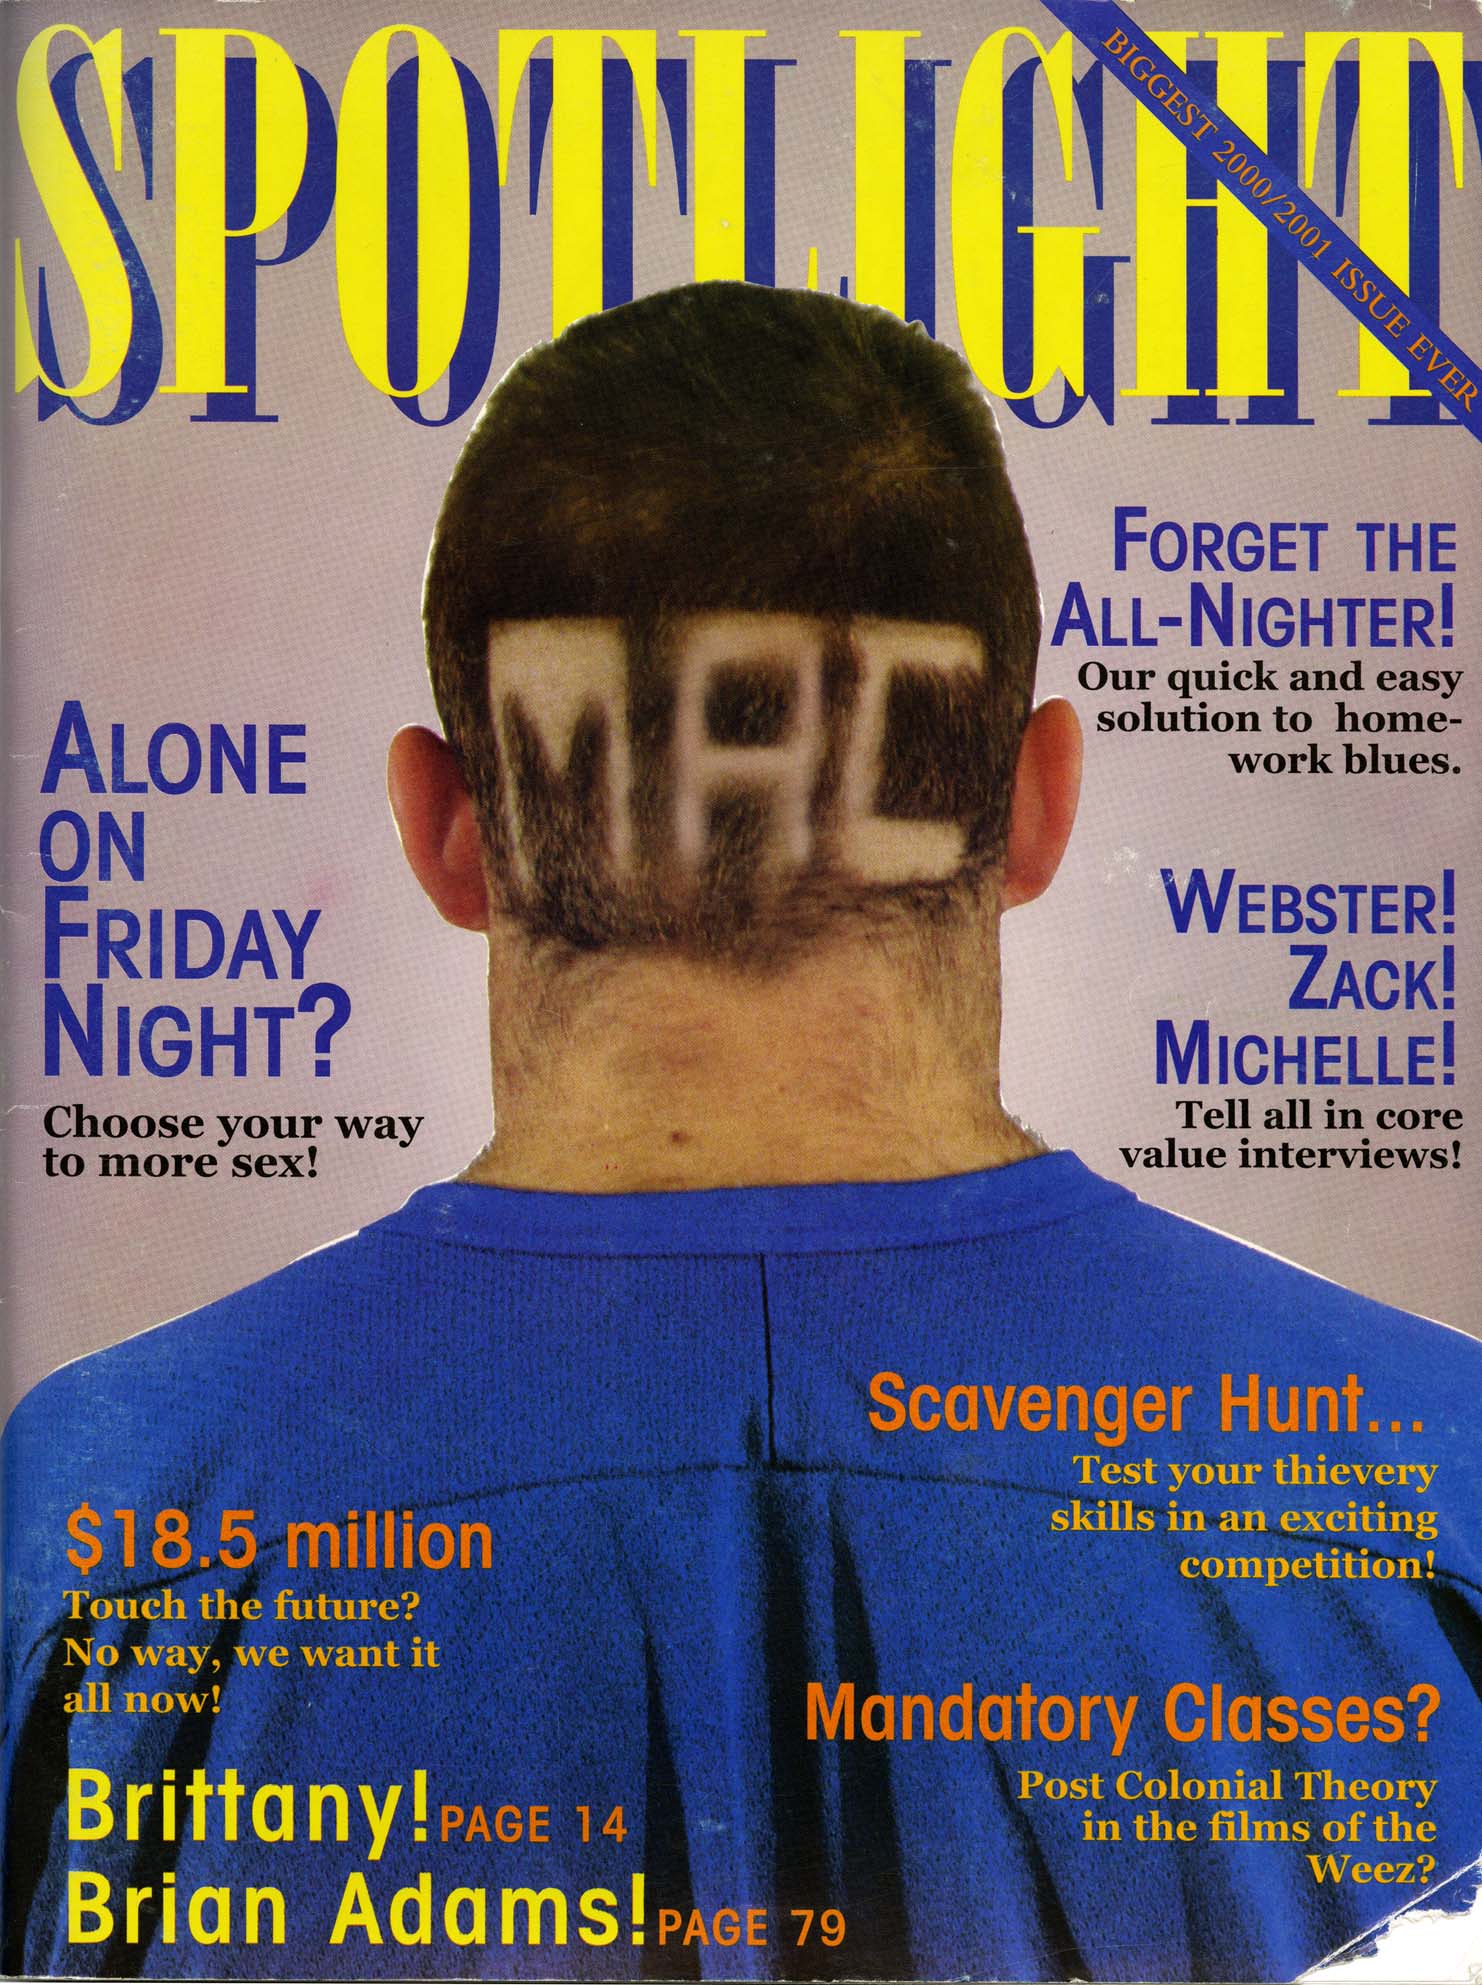 Cover of spotlight 2000-2001